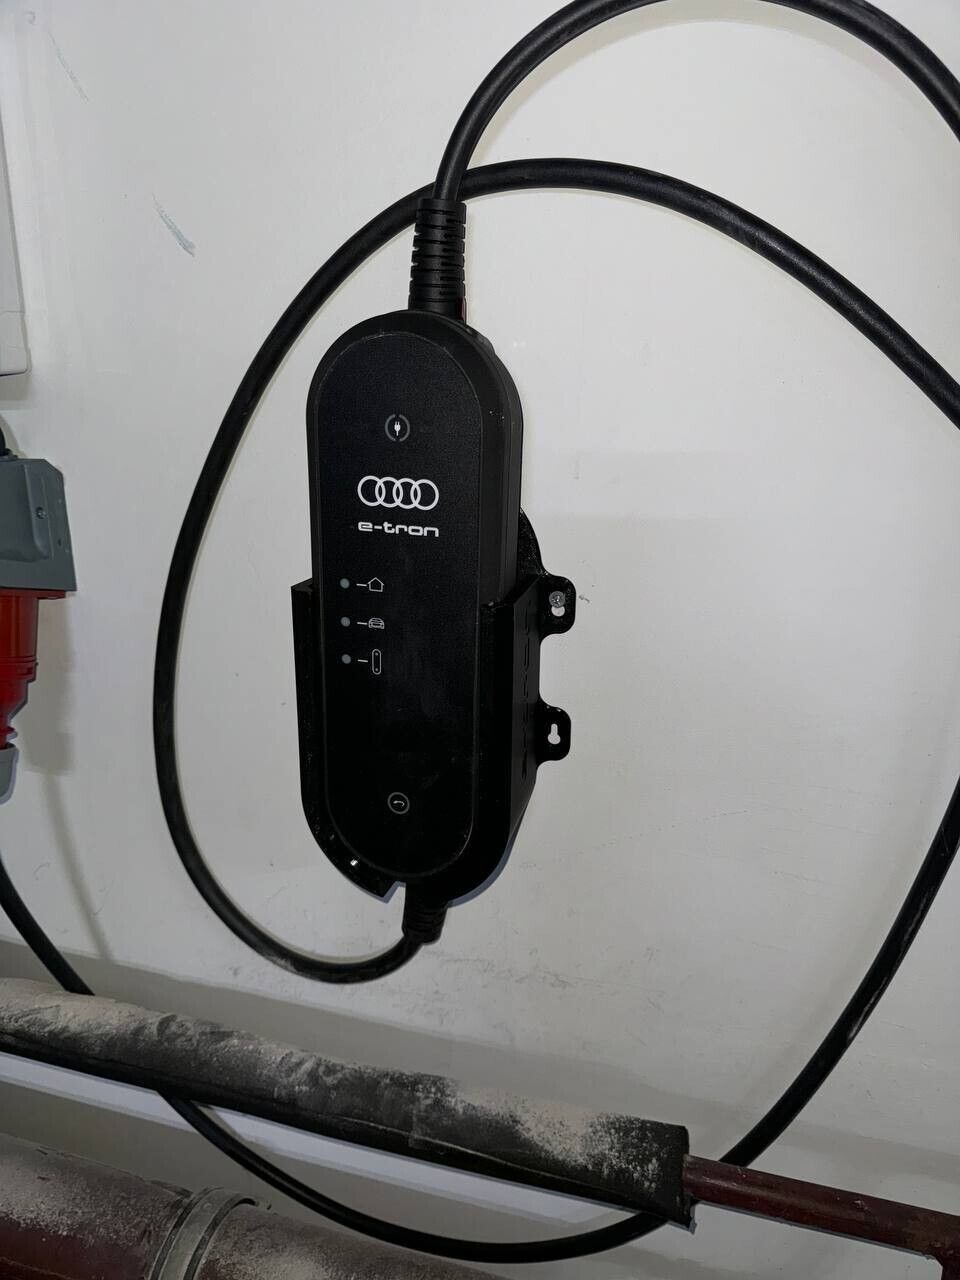 Audi E-tron wall mount